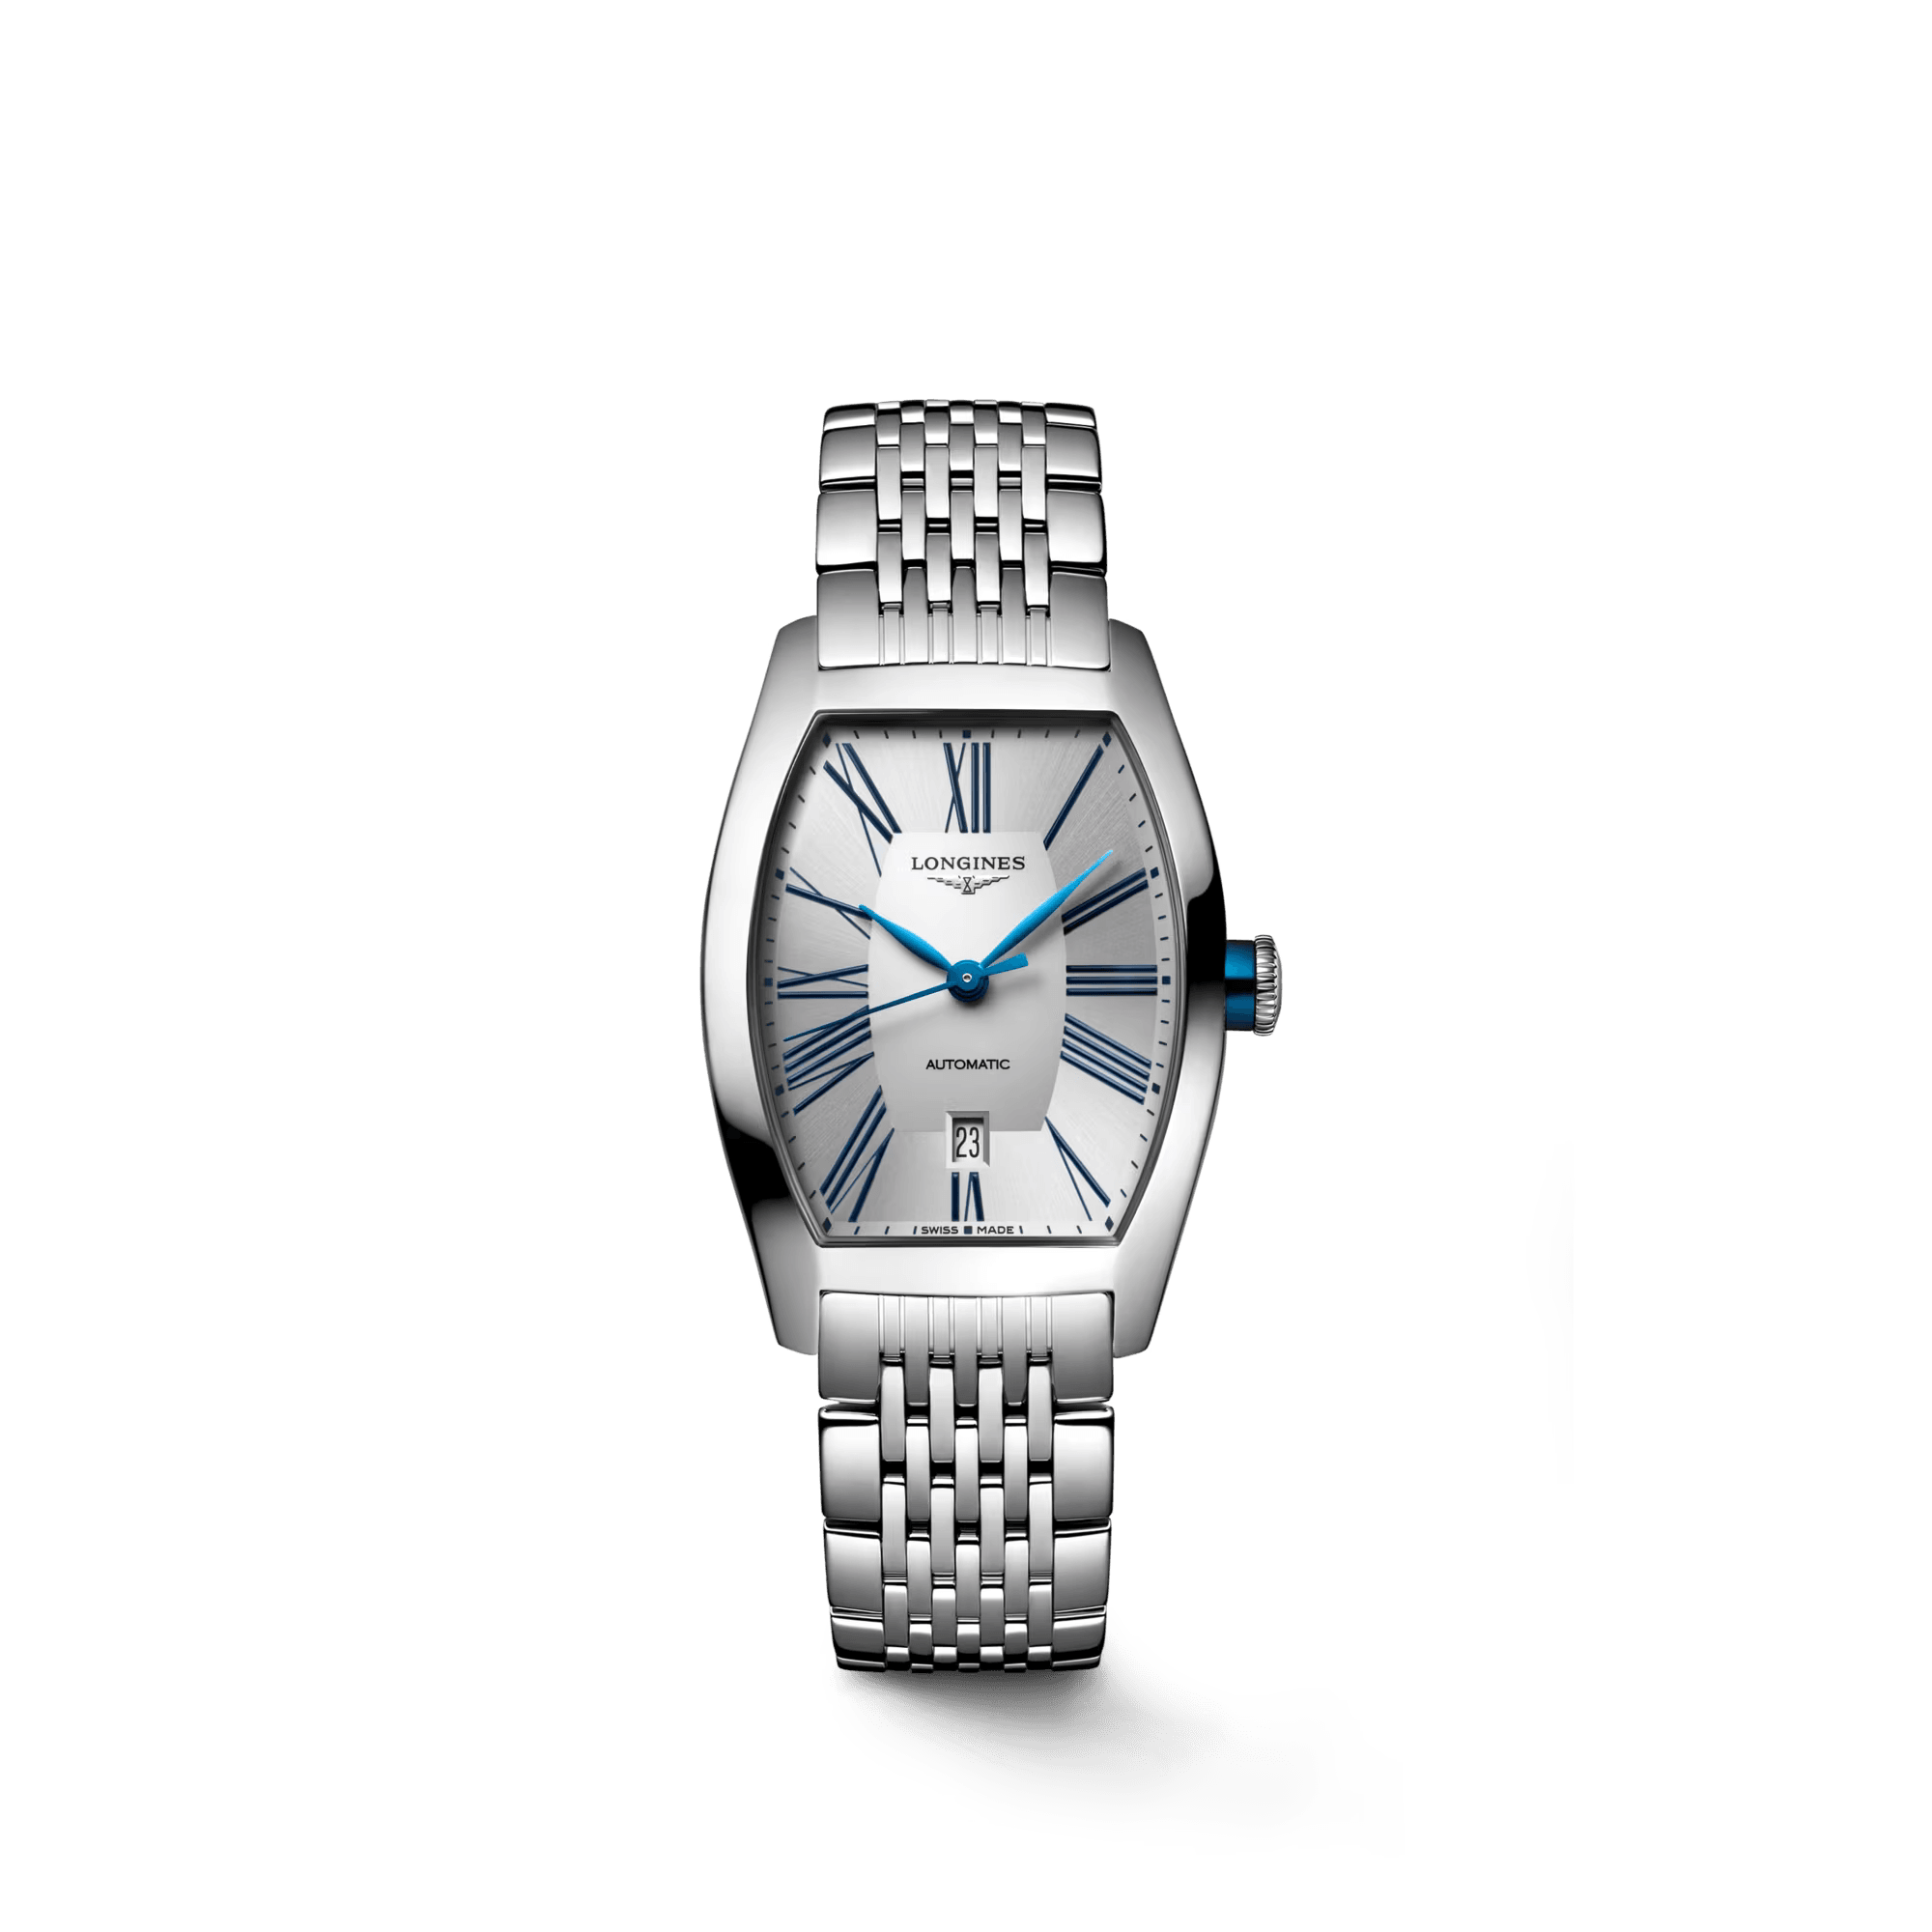 Longines Evidenza Automatic Women's Watch L21424706